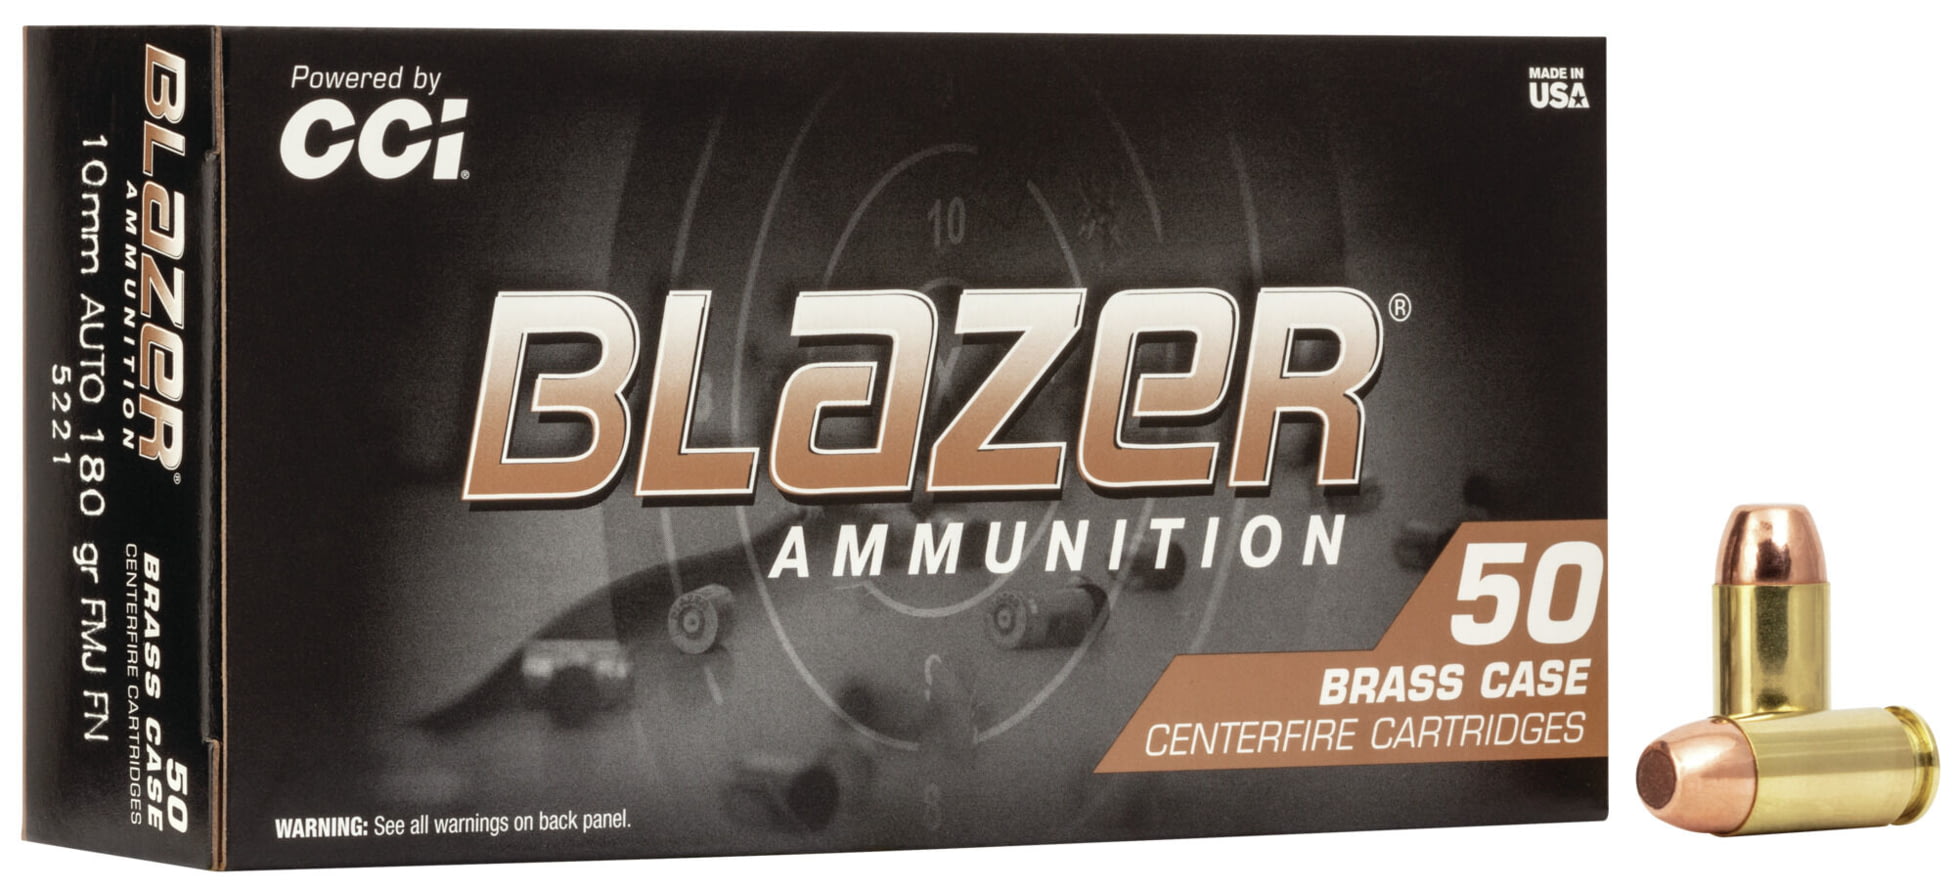 CCI Ammunition Blazer Brass 10mm Auto 180 grain Full Metal Jacket Centerfire Pistol Ammunition